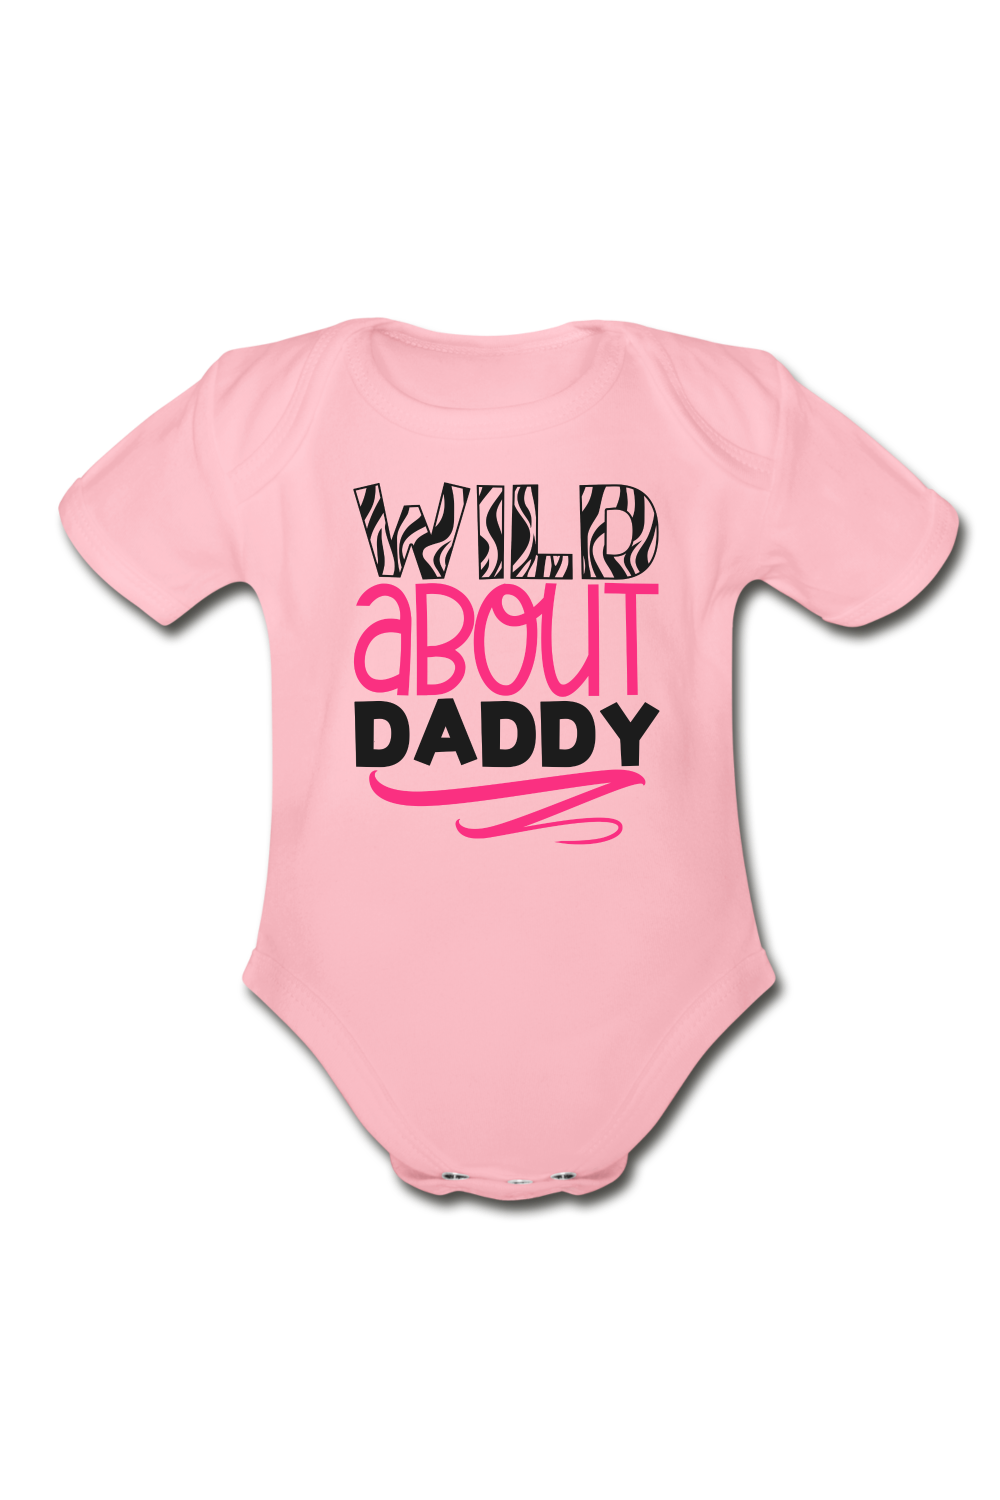 Baby Girl Wild About Daddy Short Sleeve Baby Bodysuit - light pink - NicholesGifts.online